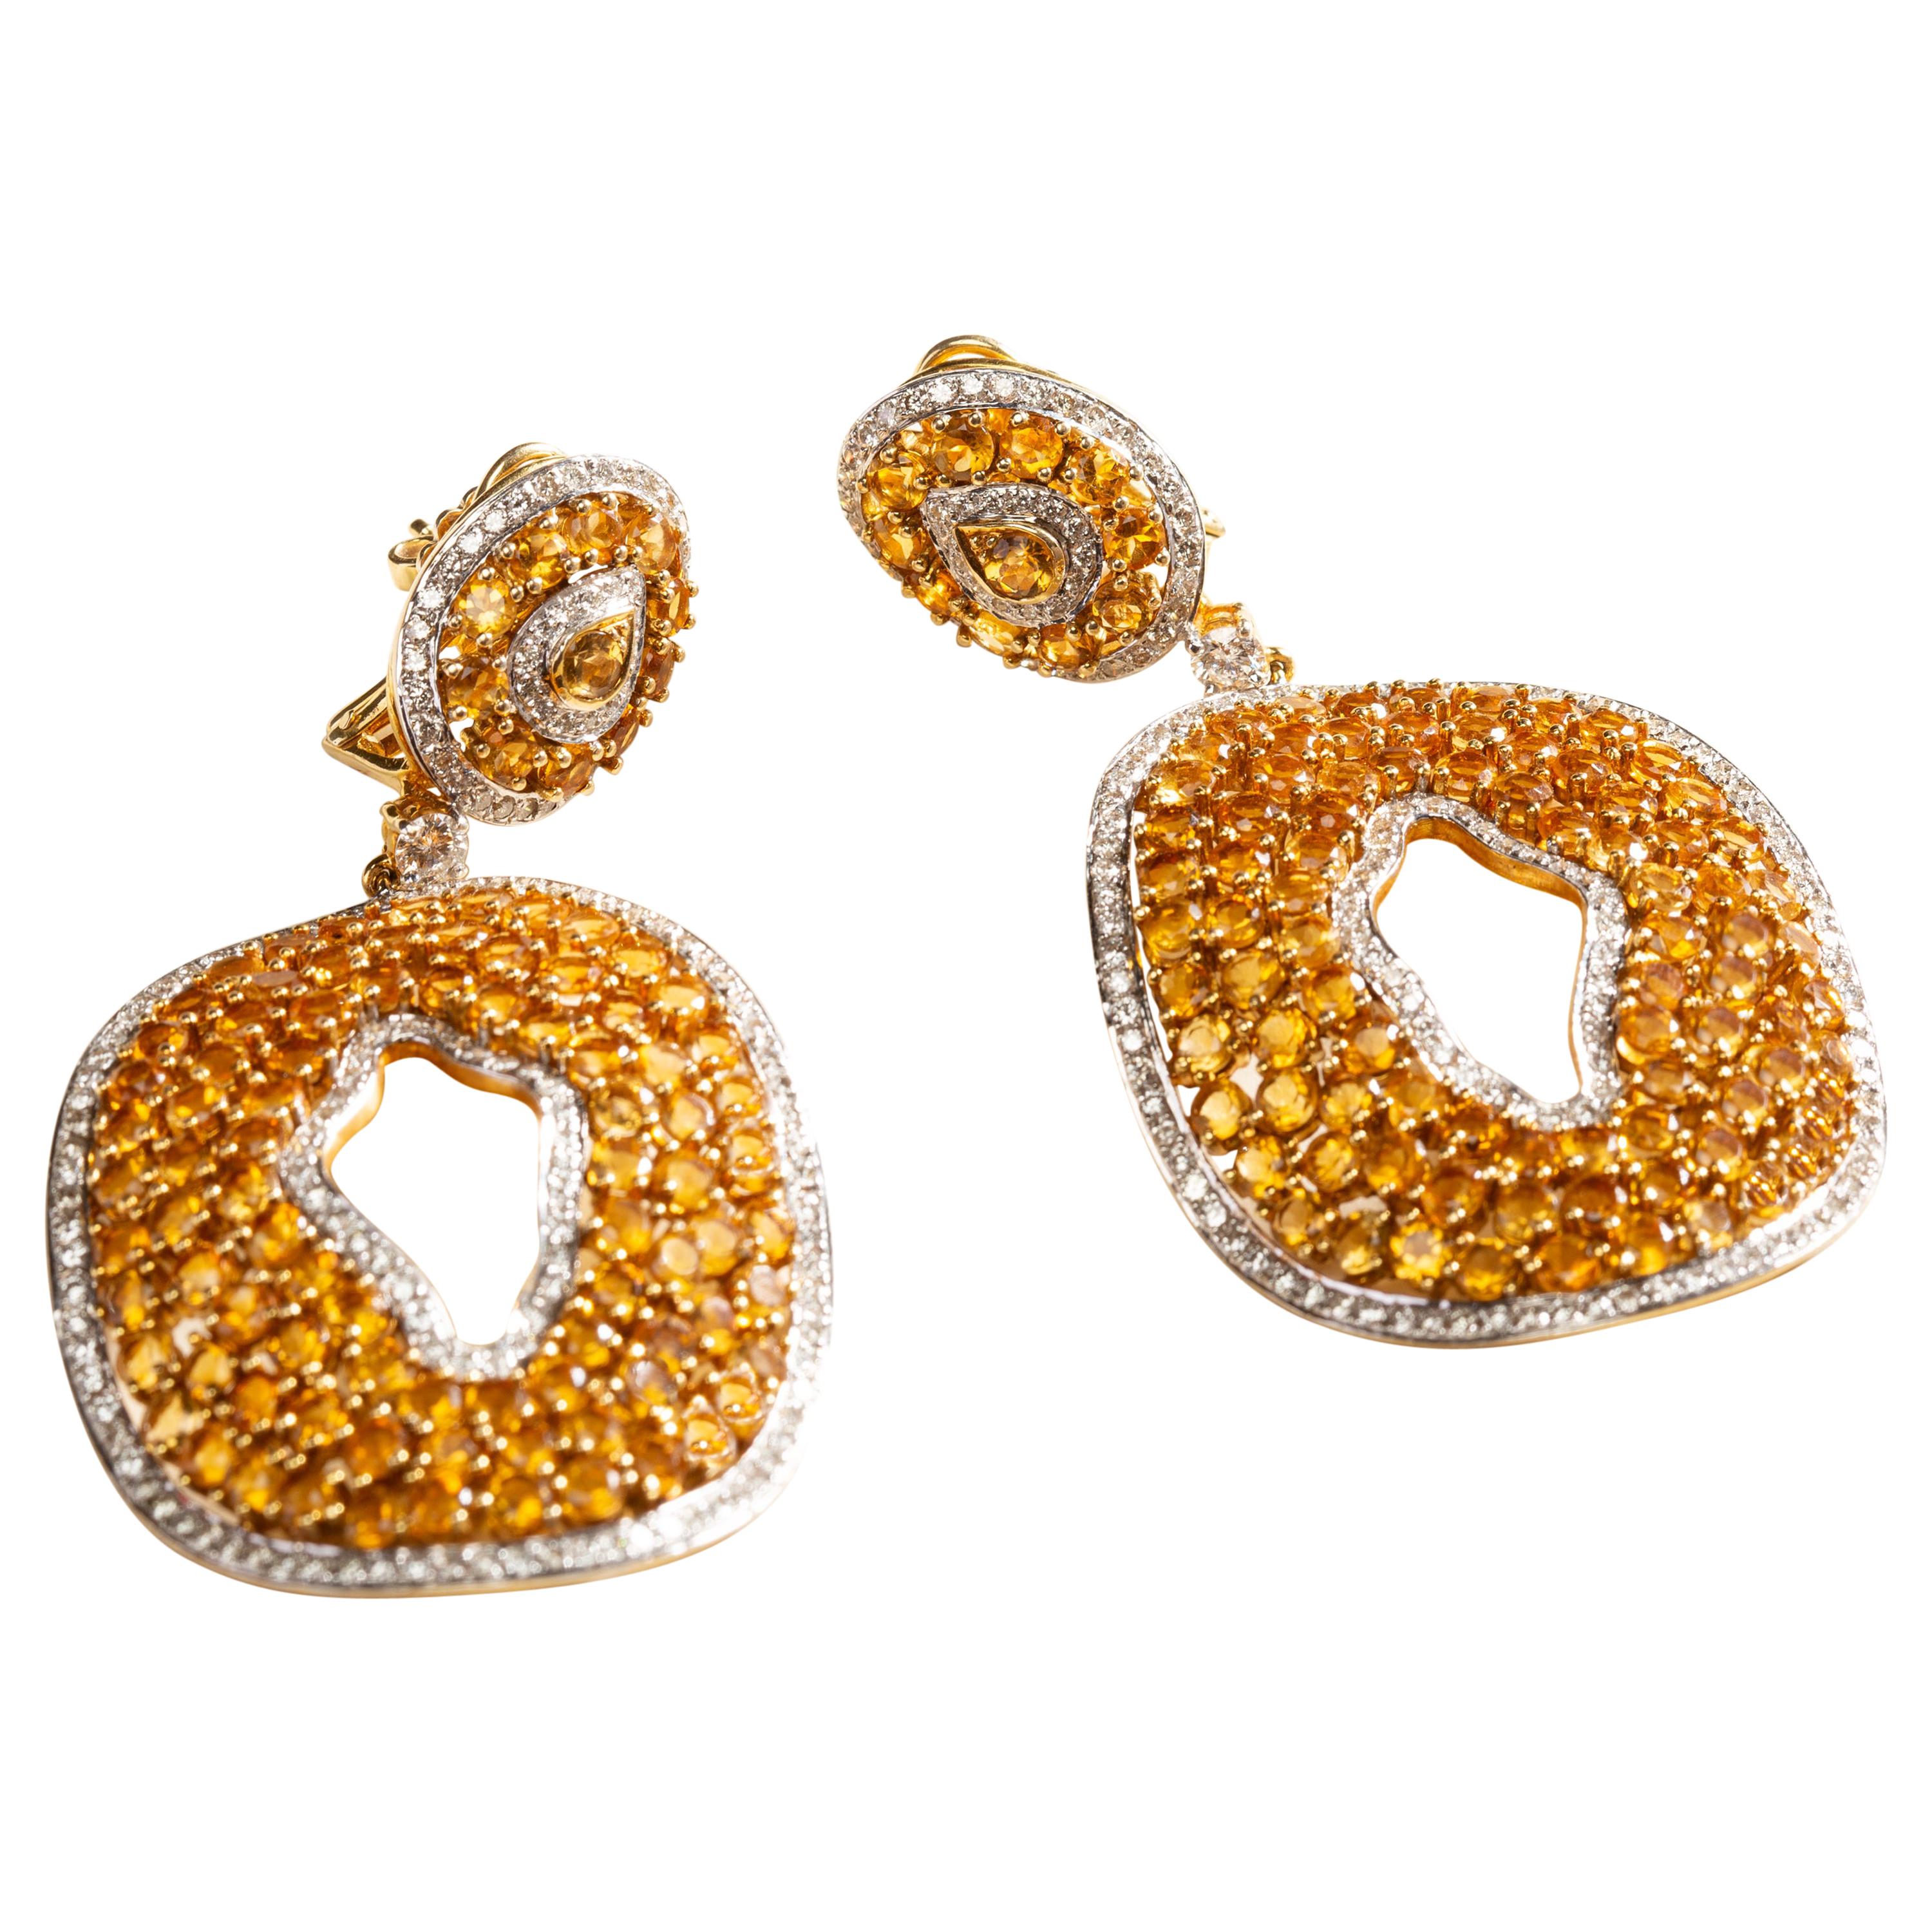 Citrine and Diamond Sweeter than Honey Earrings in 18 Karat Gold For Sale